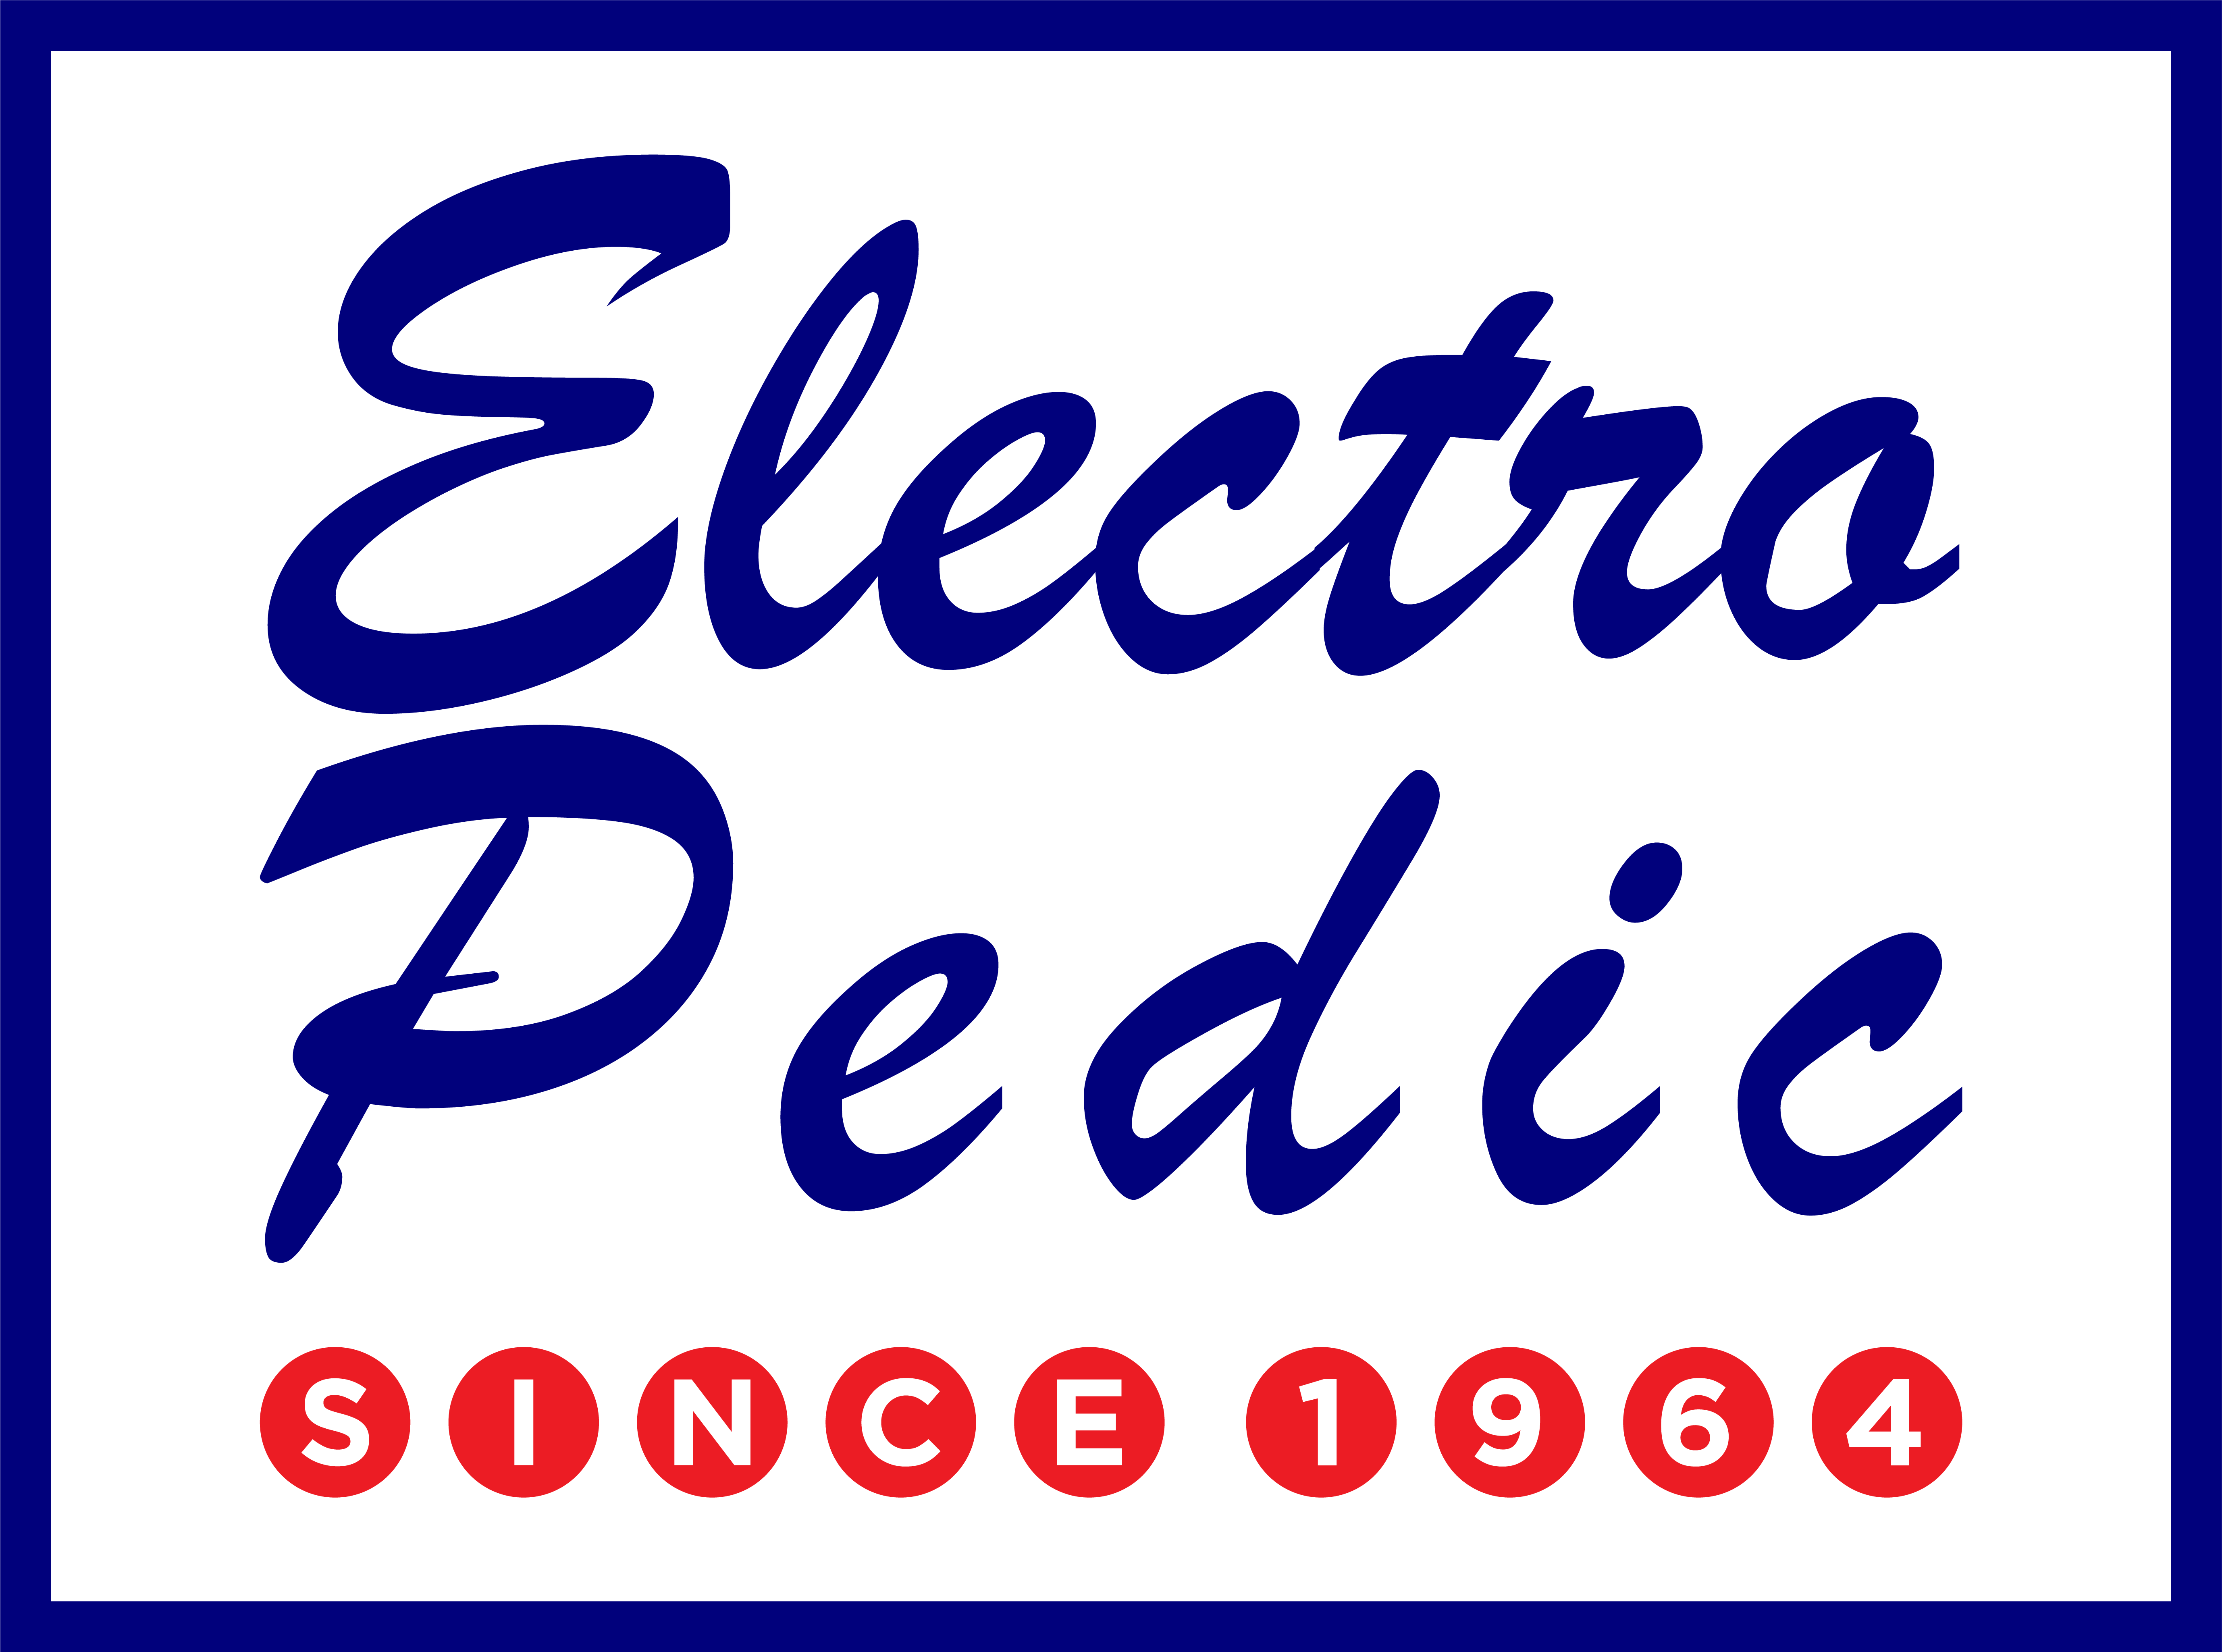 electropedic adjustable bed store